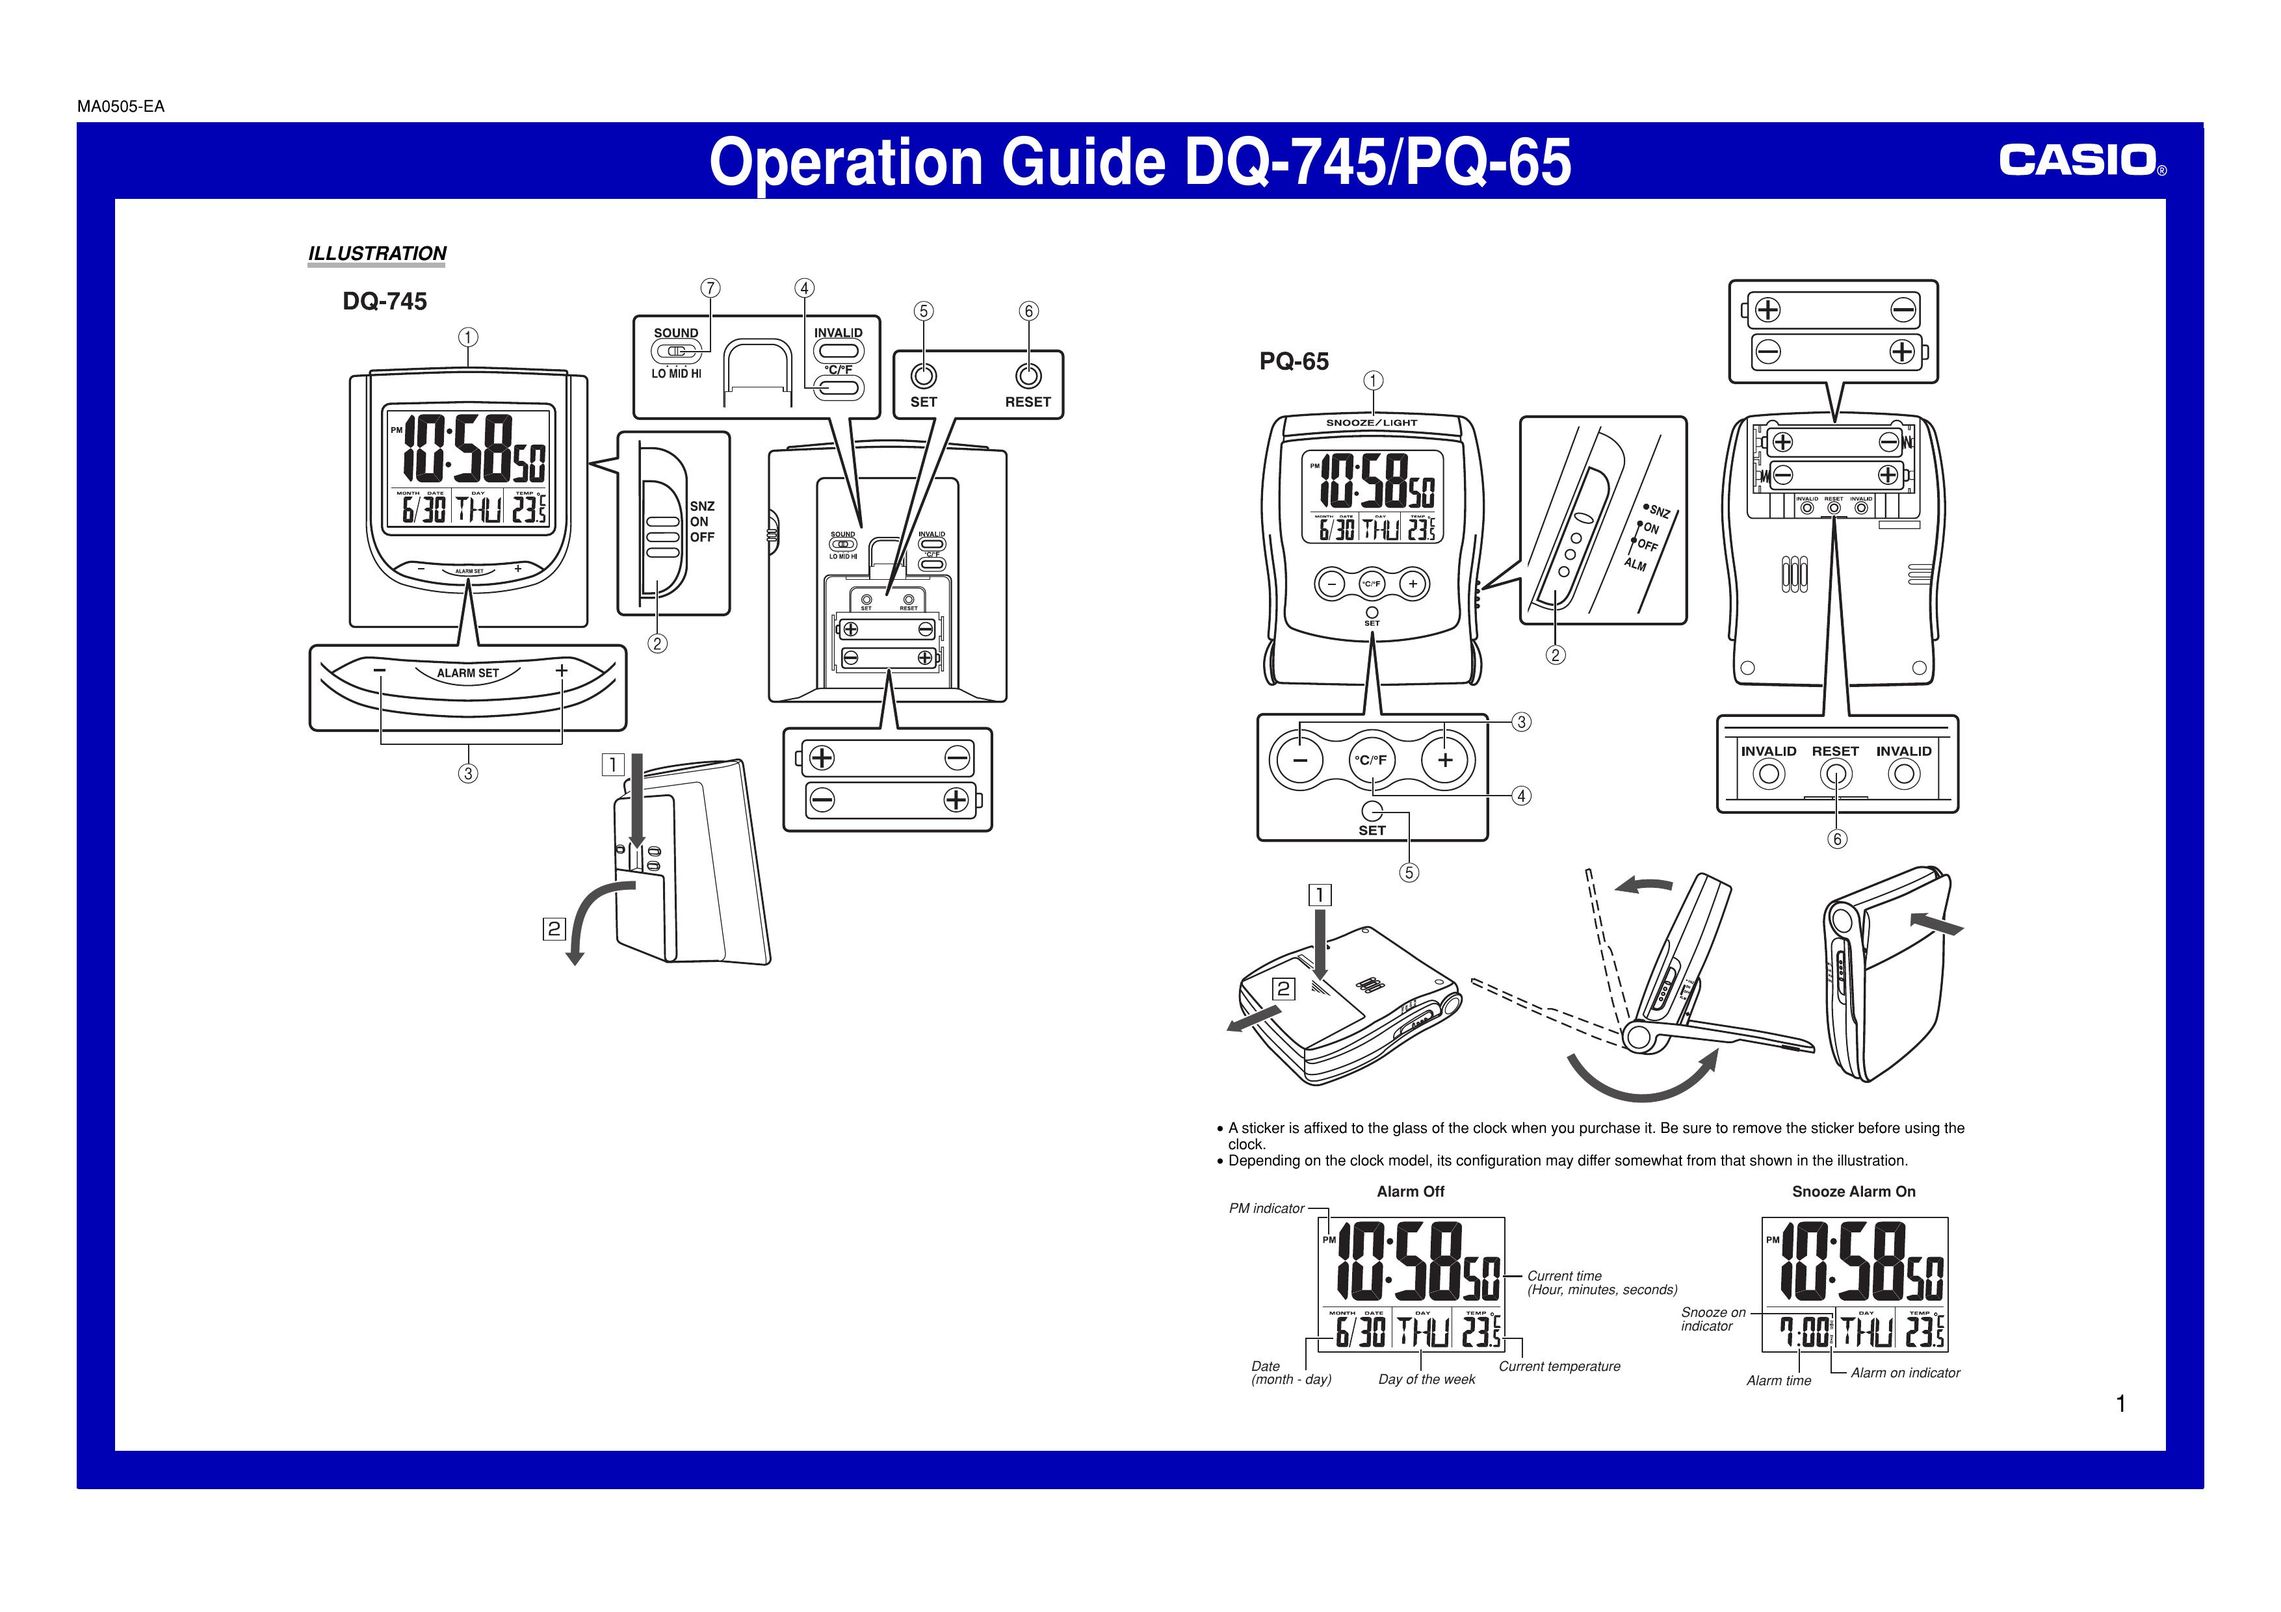 Casio MA0505-EA Clock User Manual